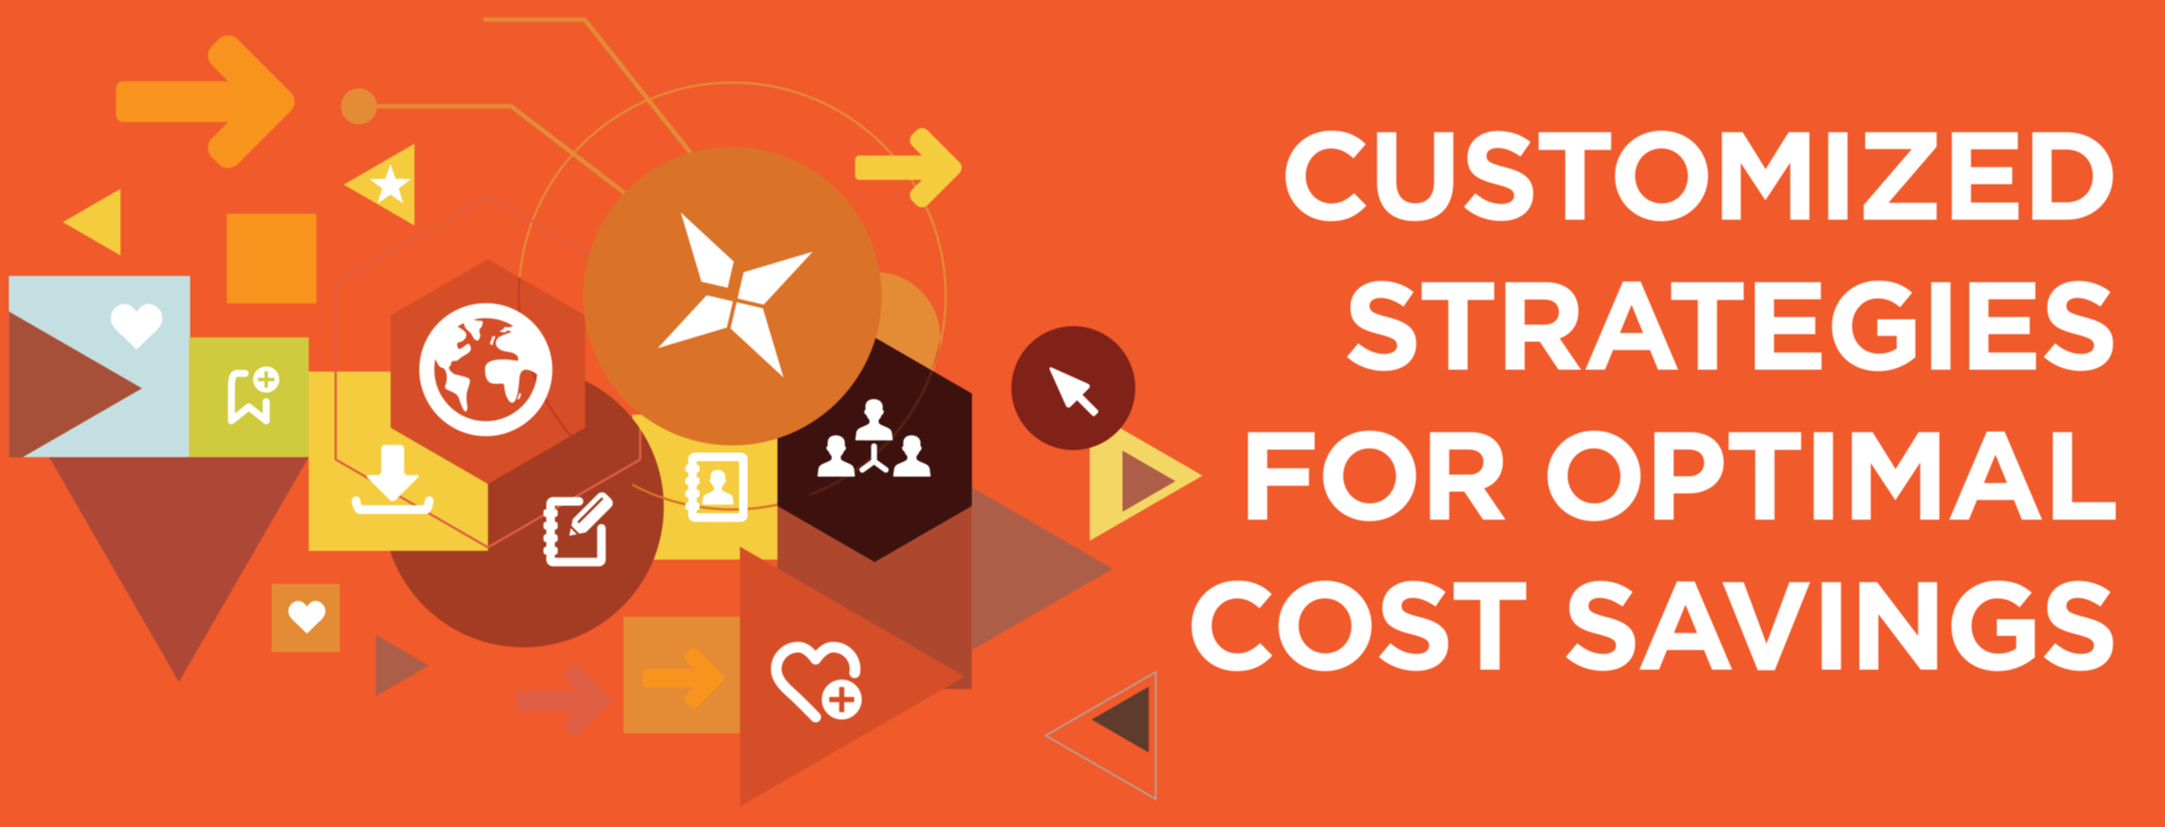 Customized Strategies for Optimal Cost Savings